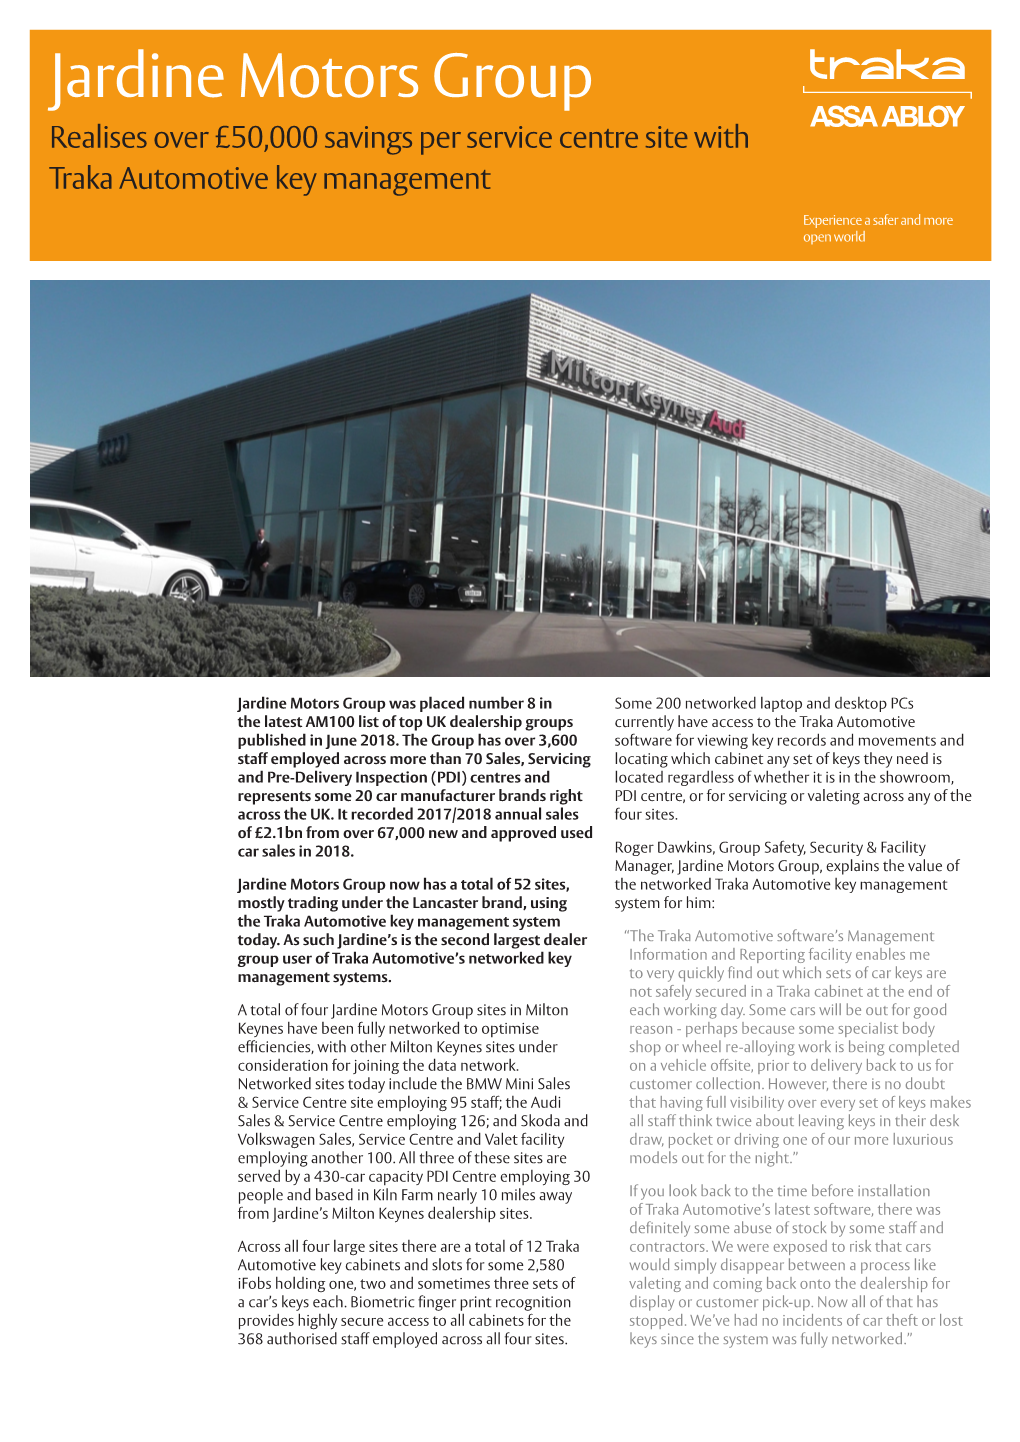 Jardine Motors Group Realises Over £50,000 Savings Per Service Centre Site with Traka Automotive Key Management